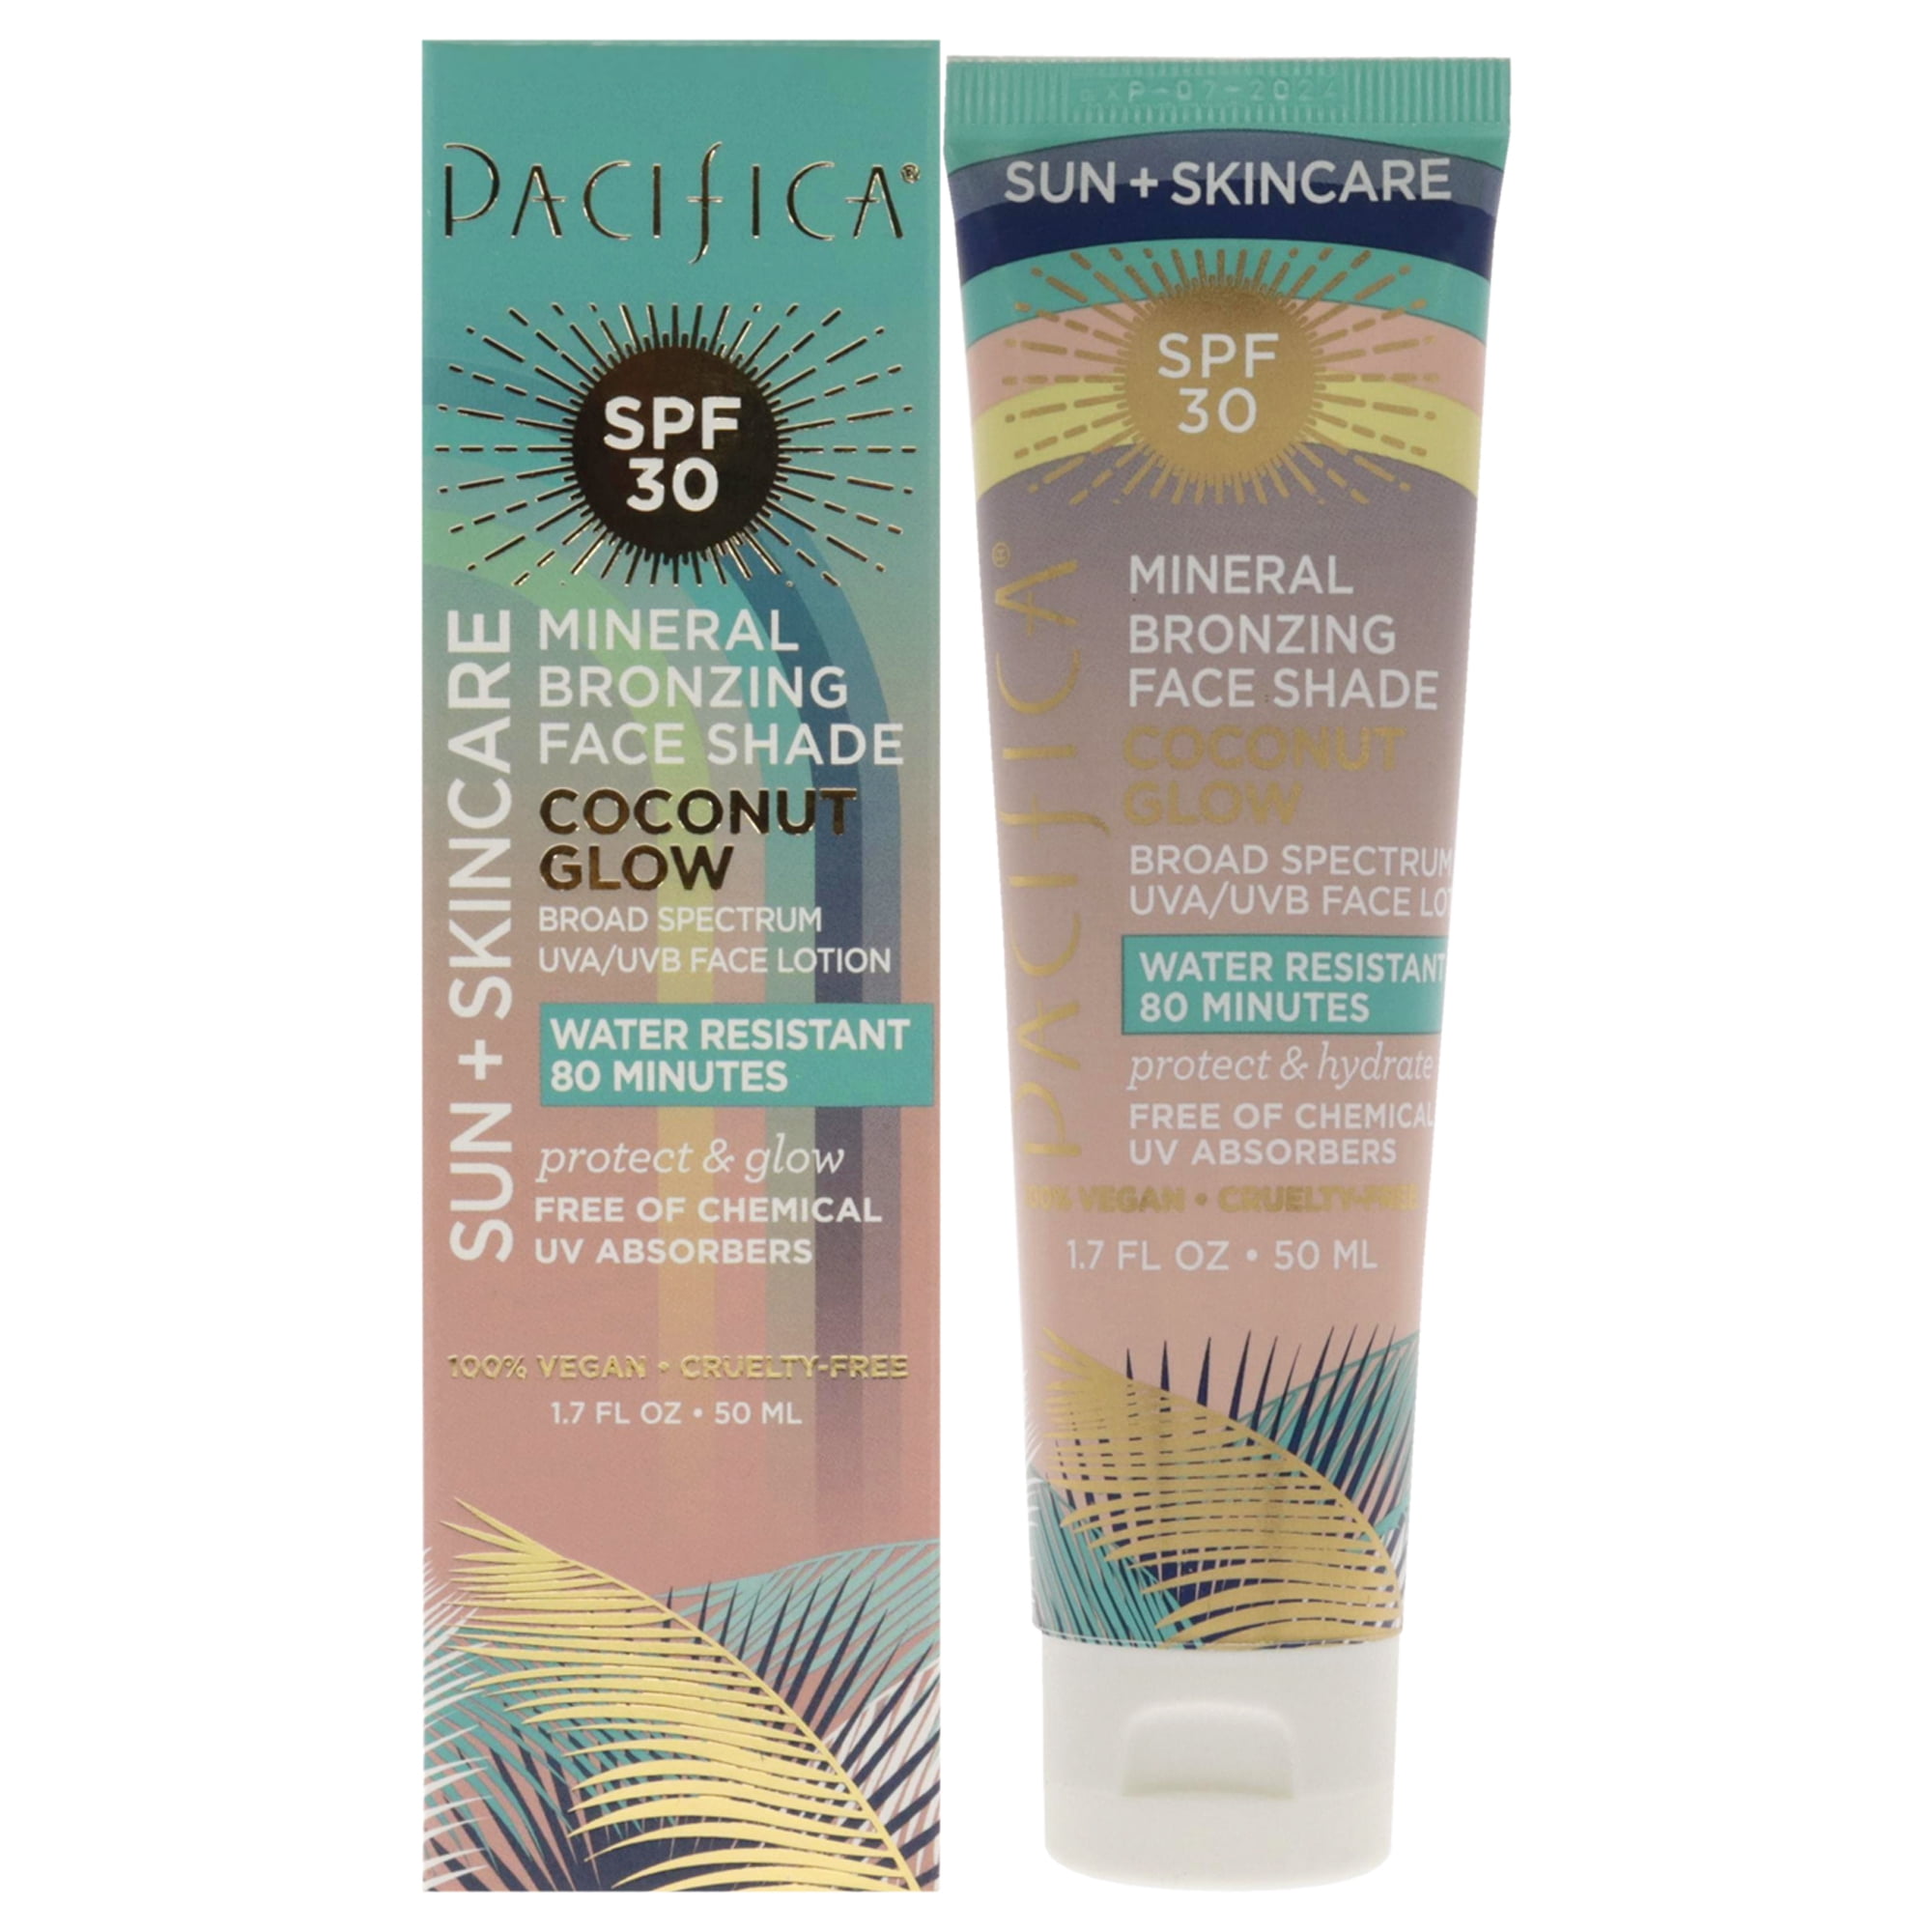 glide helt bestemt Total Pacifica Mineral Bronzing Face Shade SPF 30 - Coconut Glow 1.7 oz Sunscreen  - Walmart.com